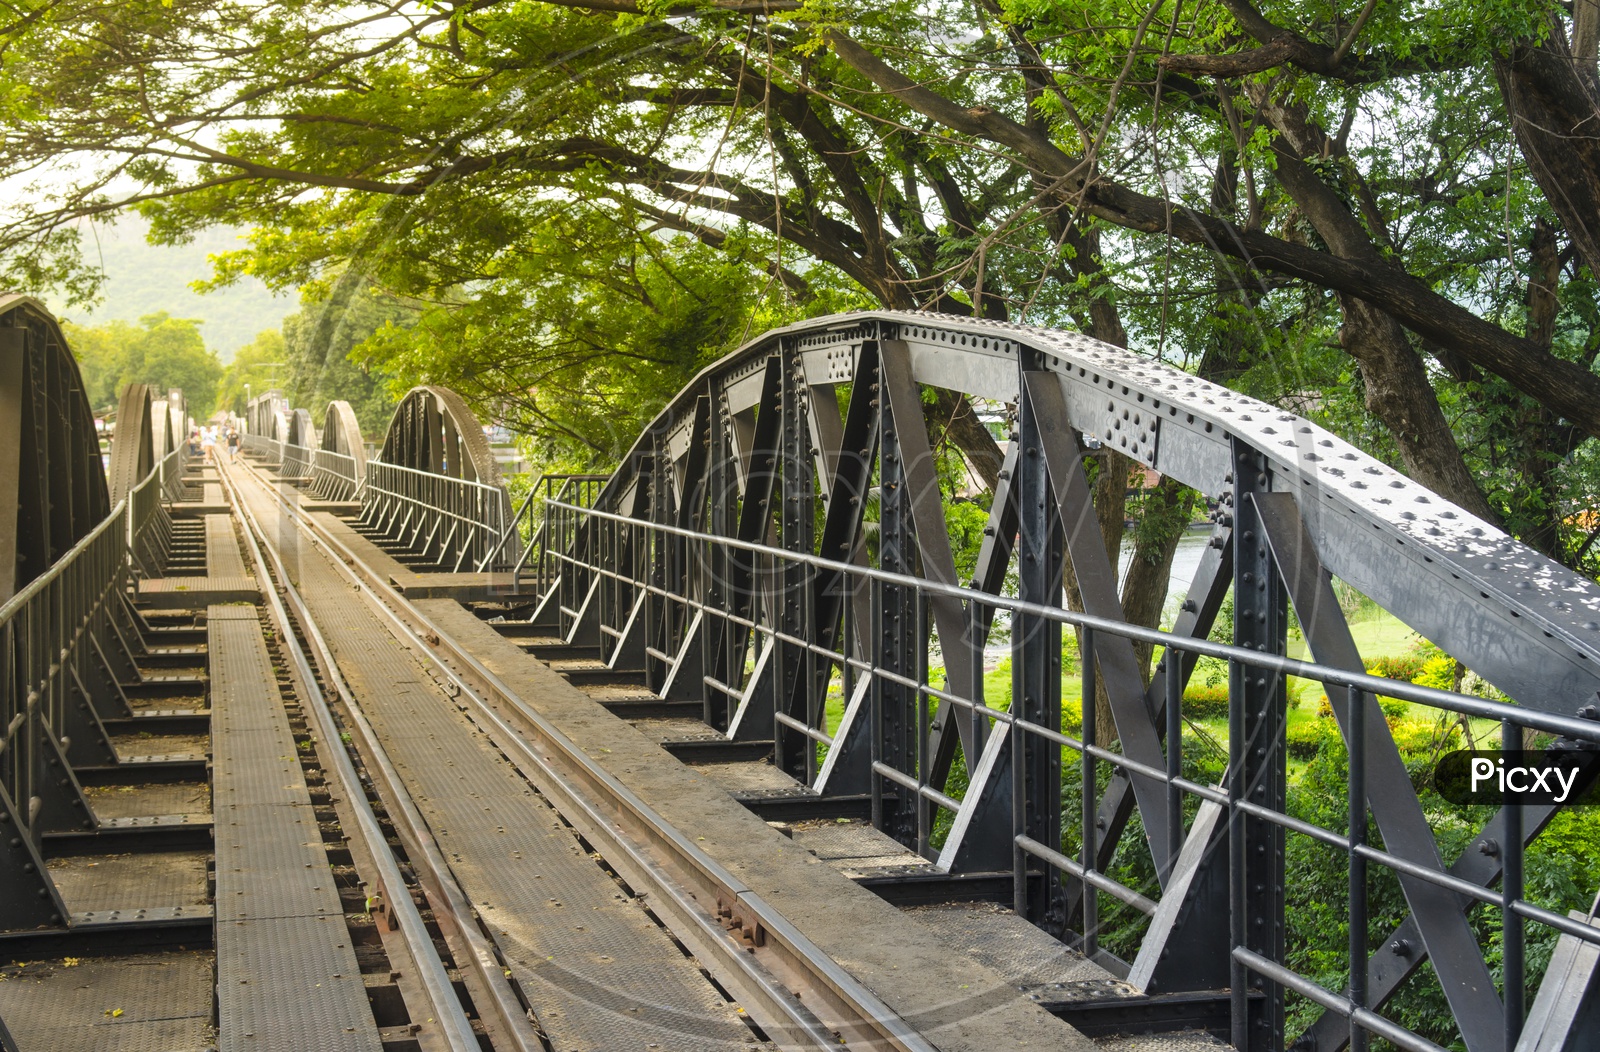 Arch Railway Bridge With Railway Track